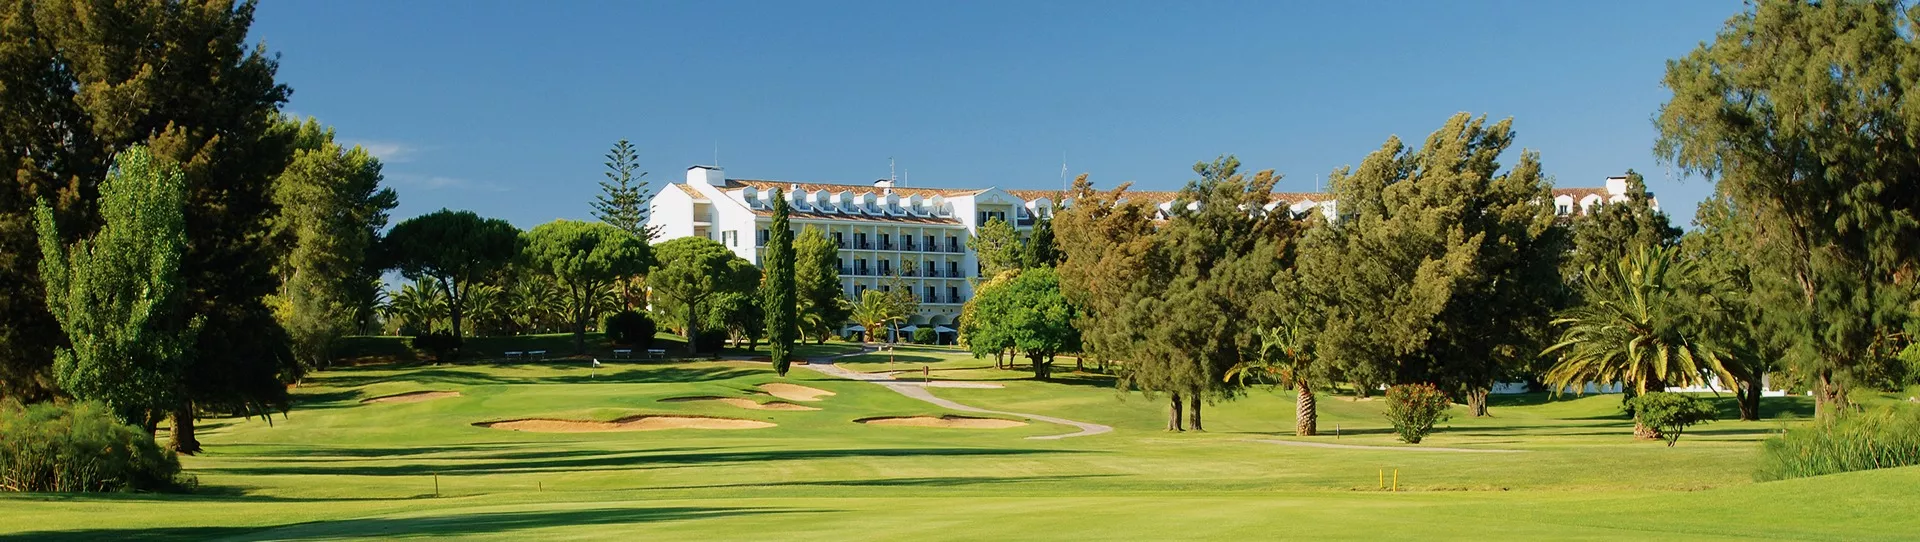 Portugal golf courses - Penina Championship - Photo 1